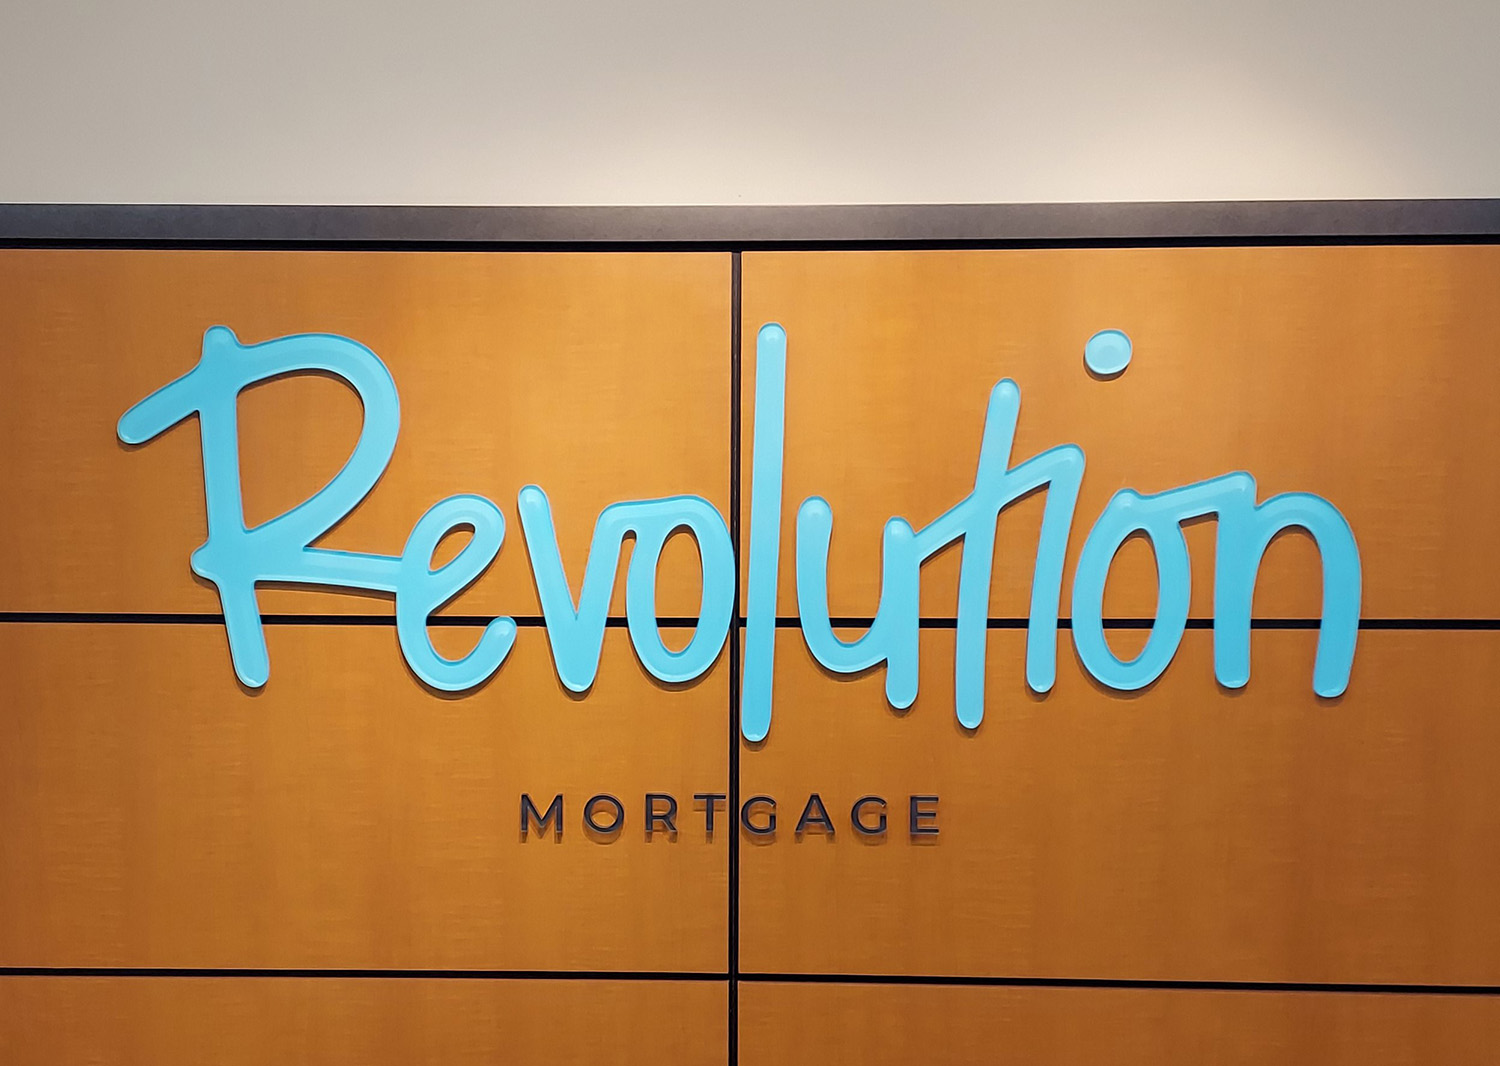 lobby-logos-revolution-mortgage